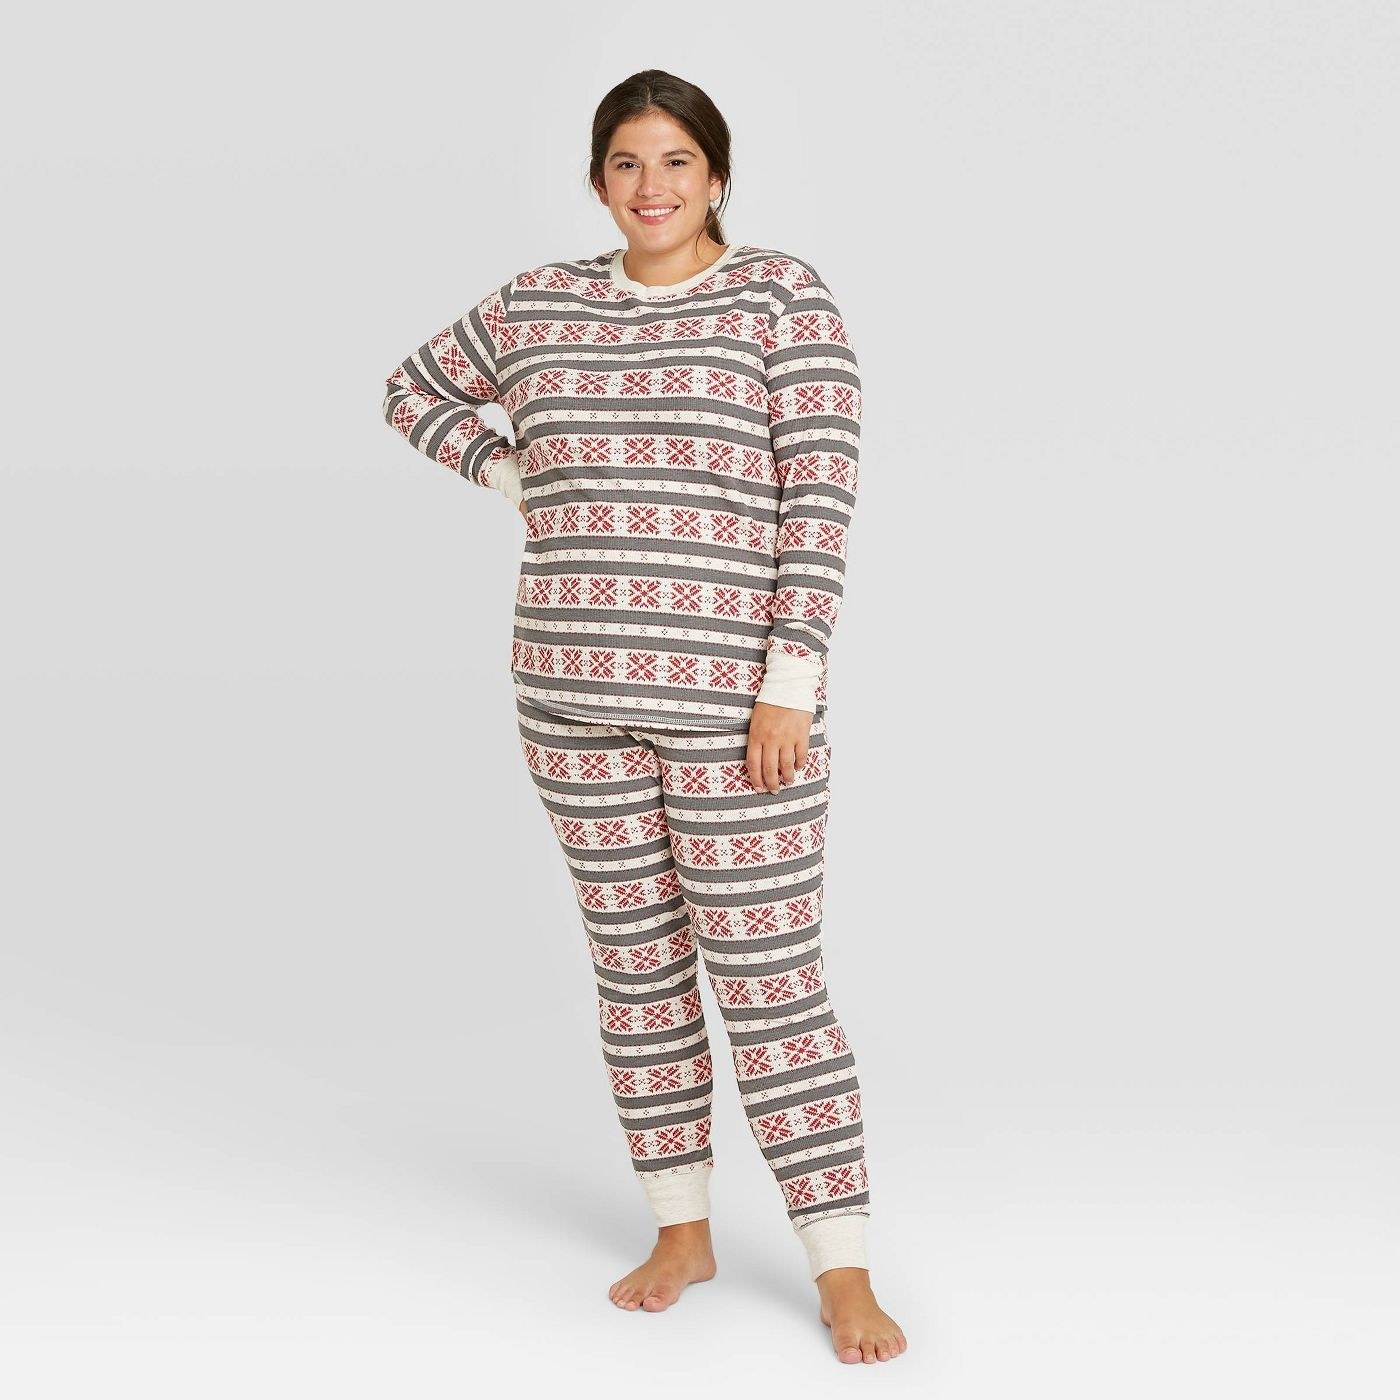 Model in thermal pajama set 